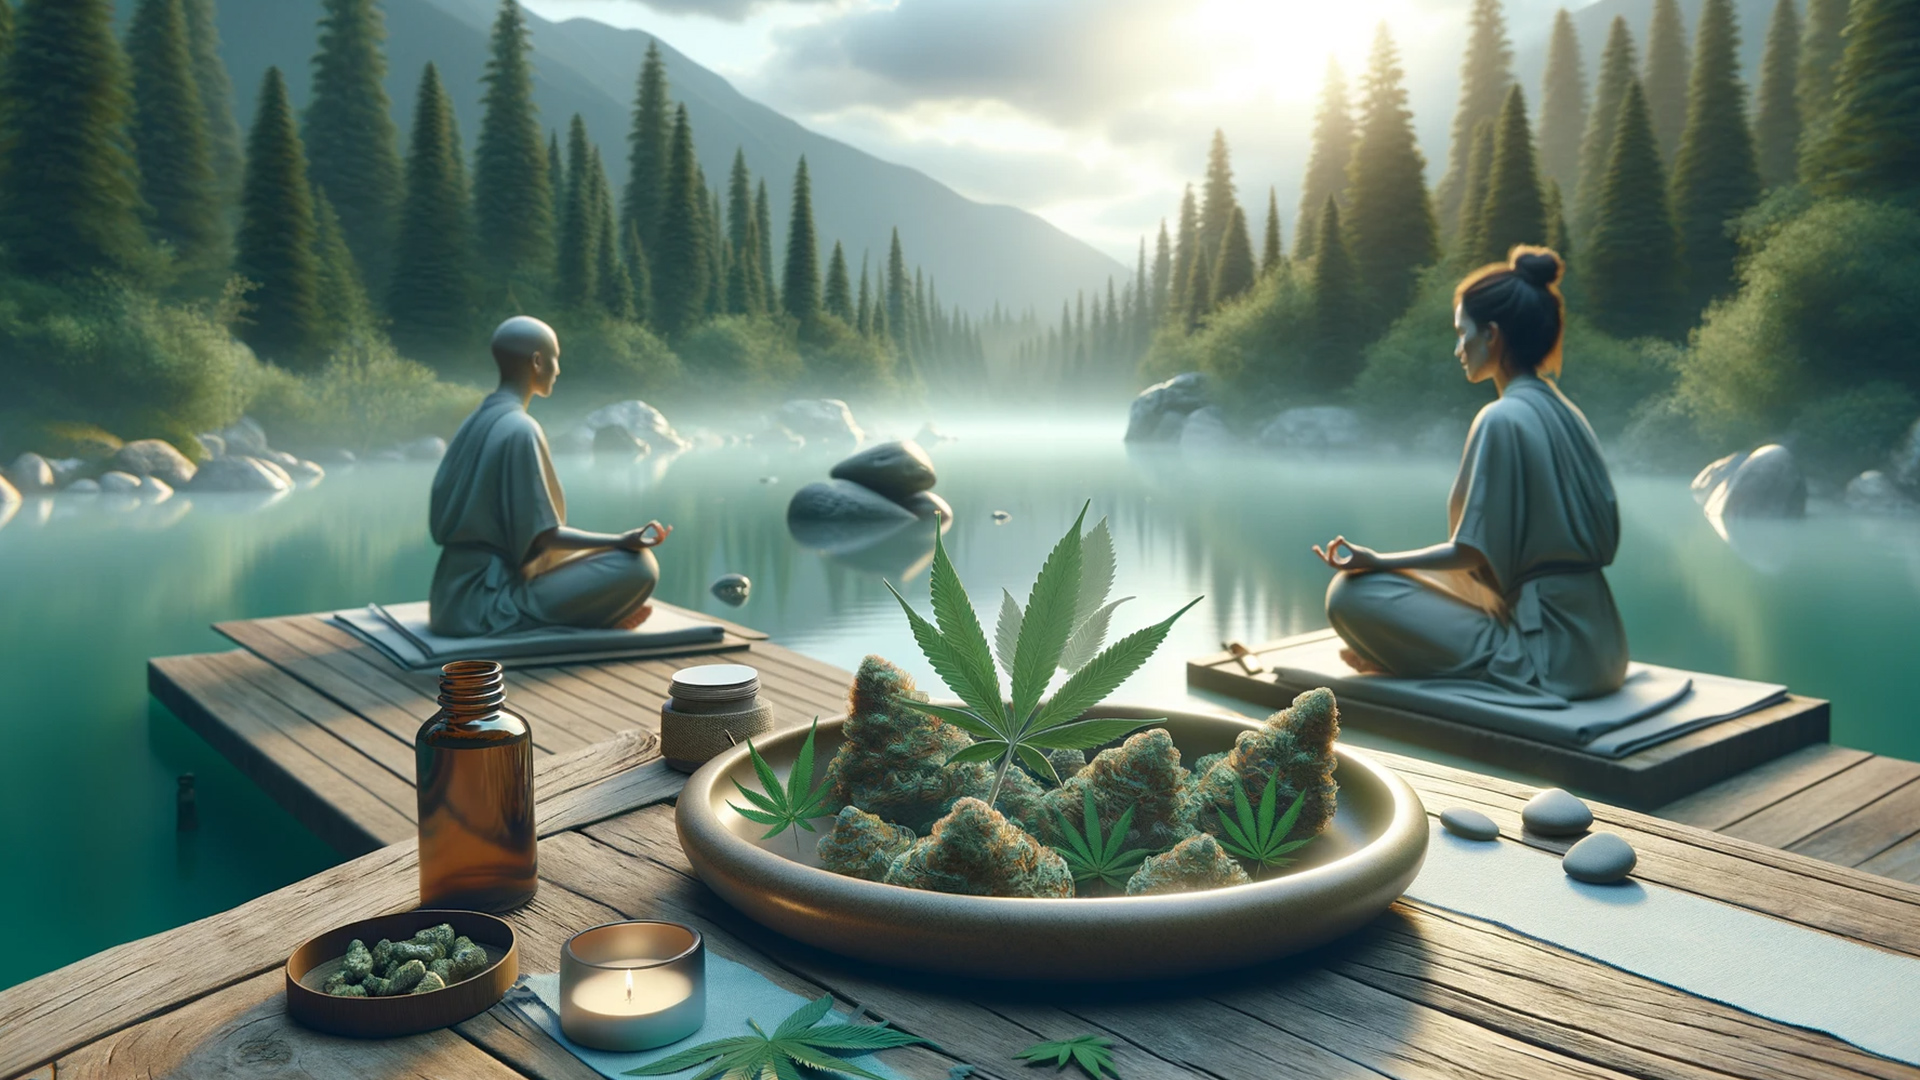 Serene natural landscape symbolizing mental wellness and subtle cannabis elements